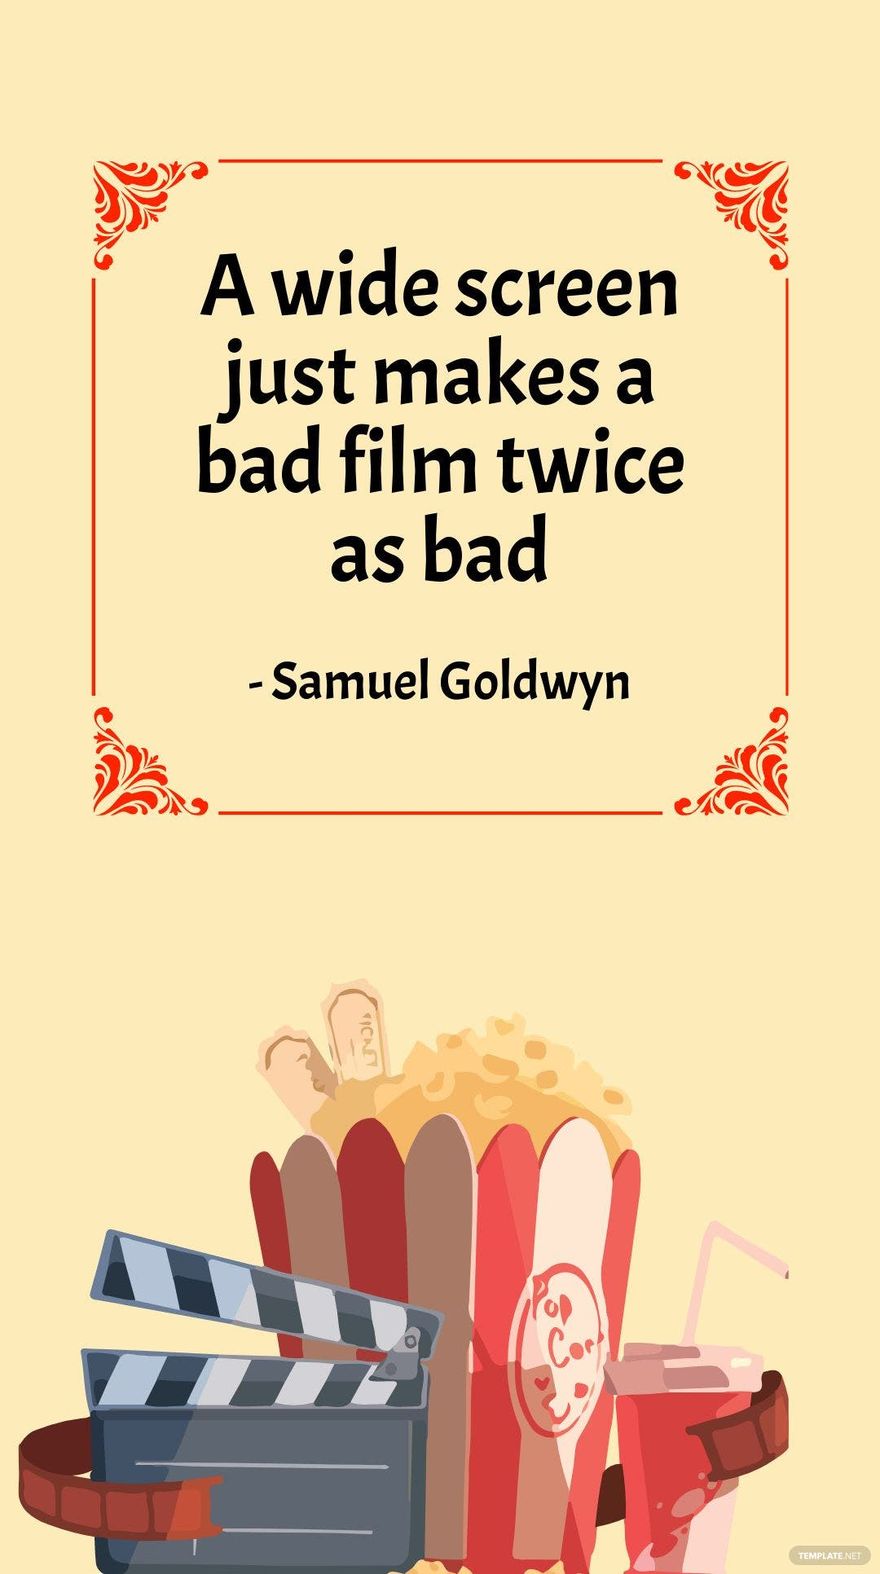 Samuel Goldwyn -A wide screen just makes a bad film twice as bad